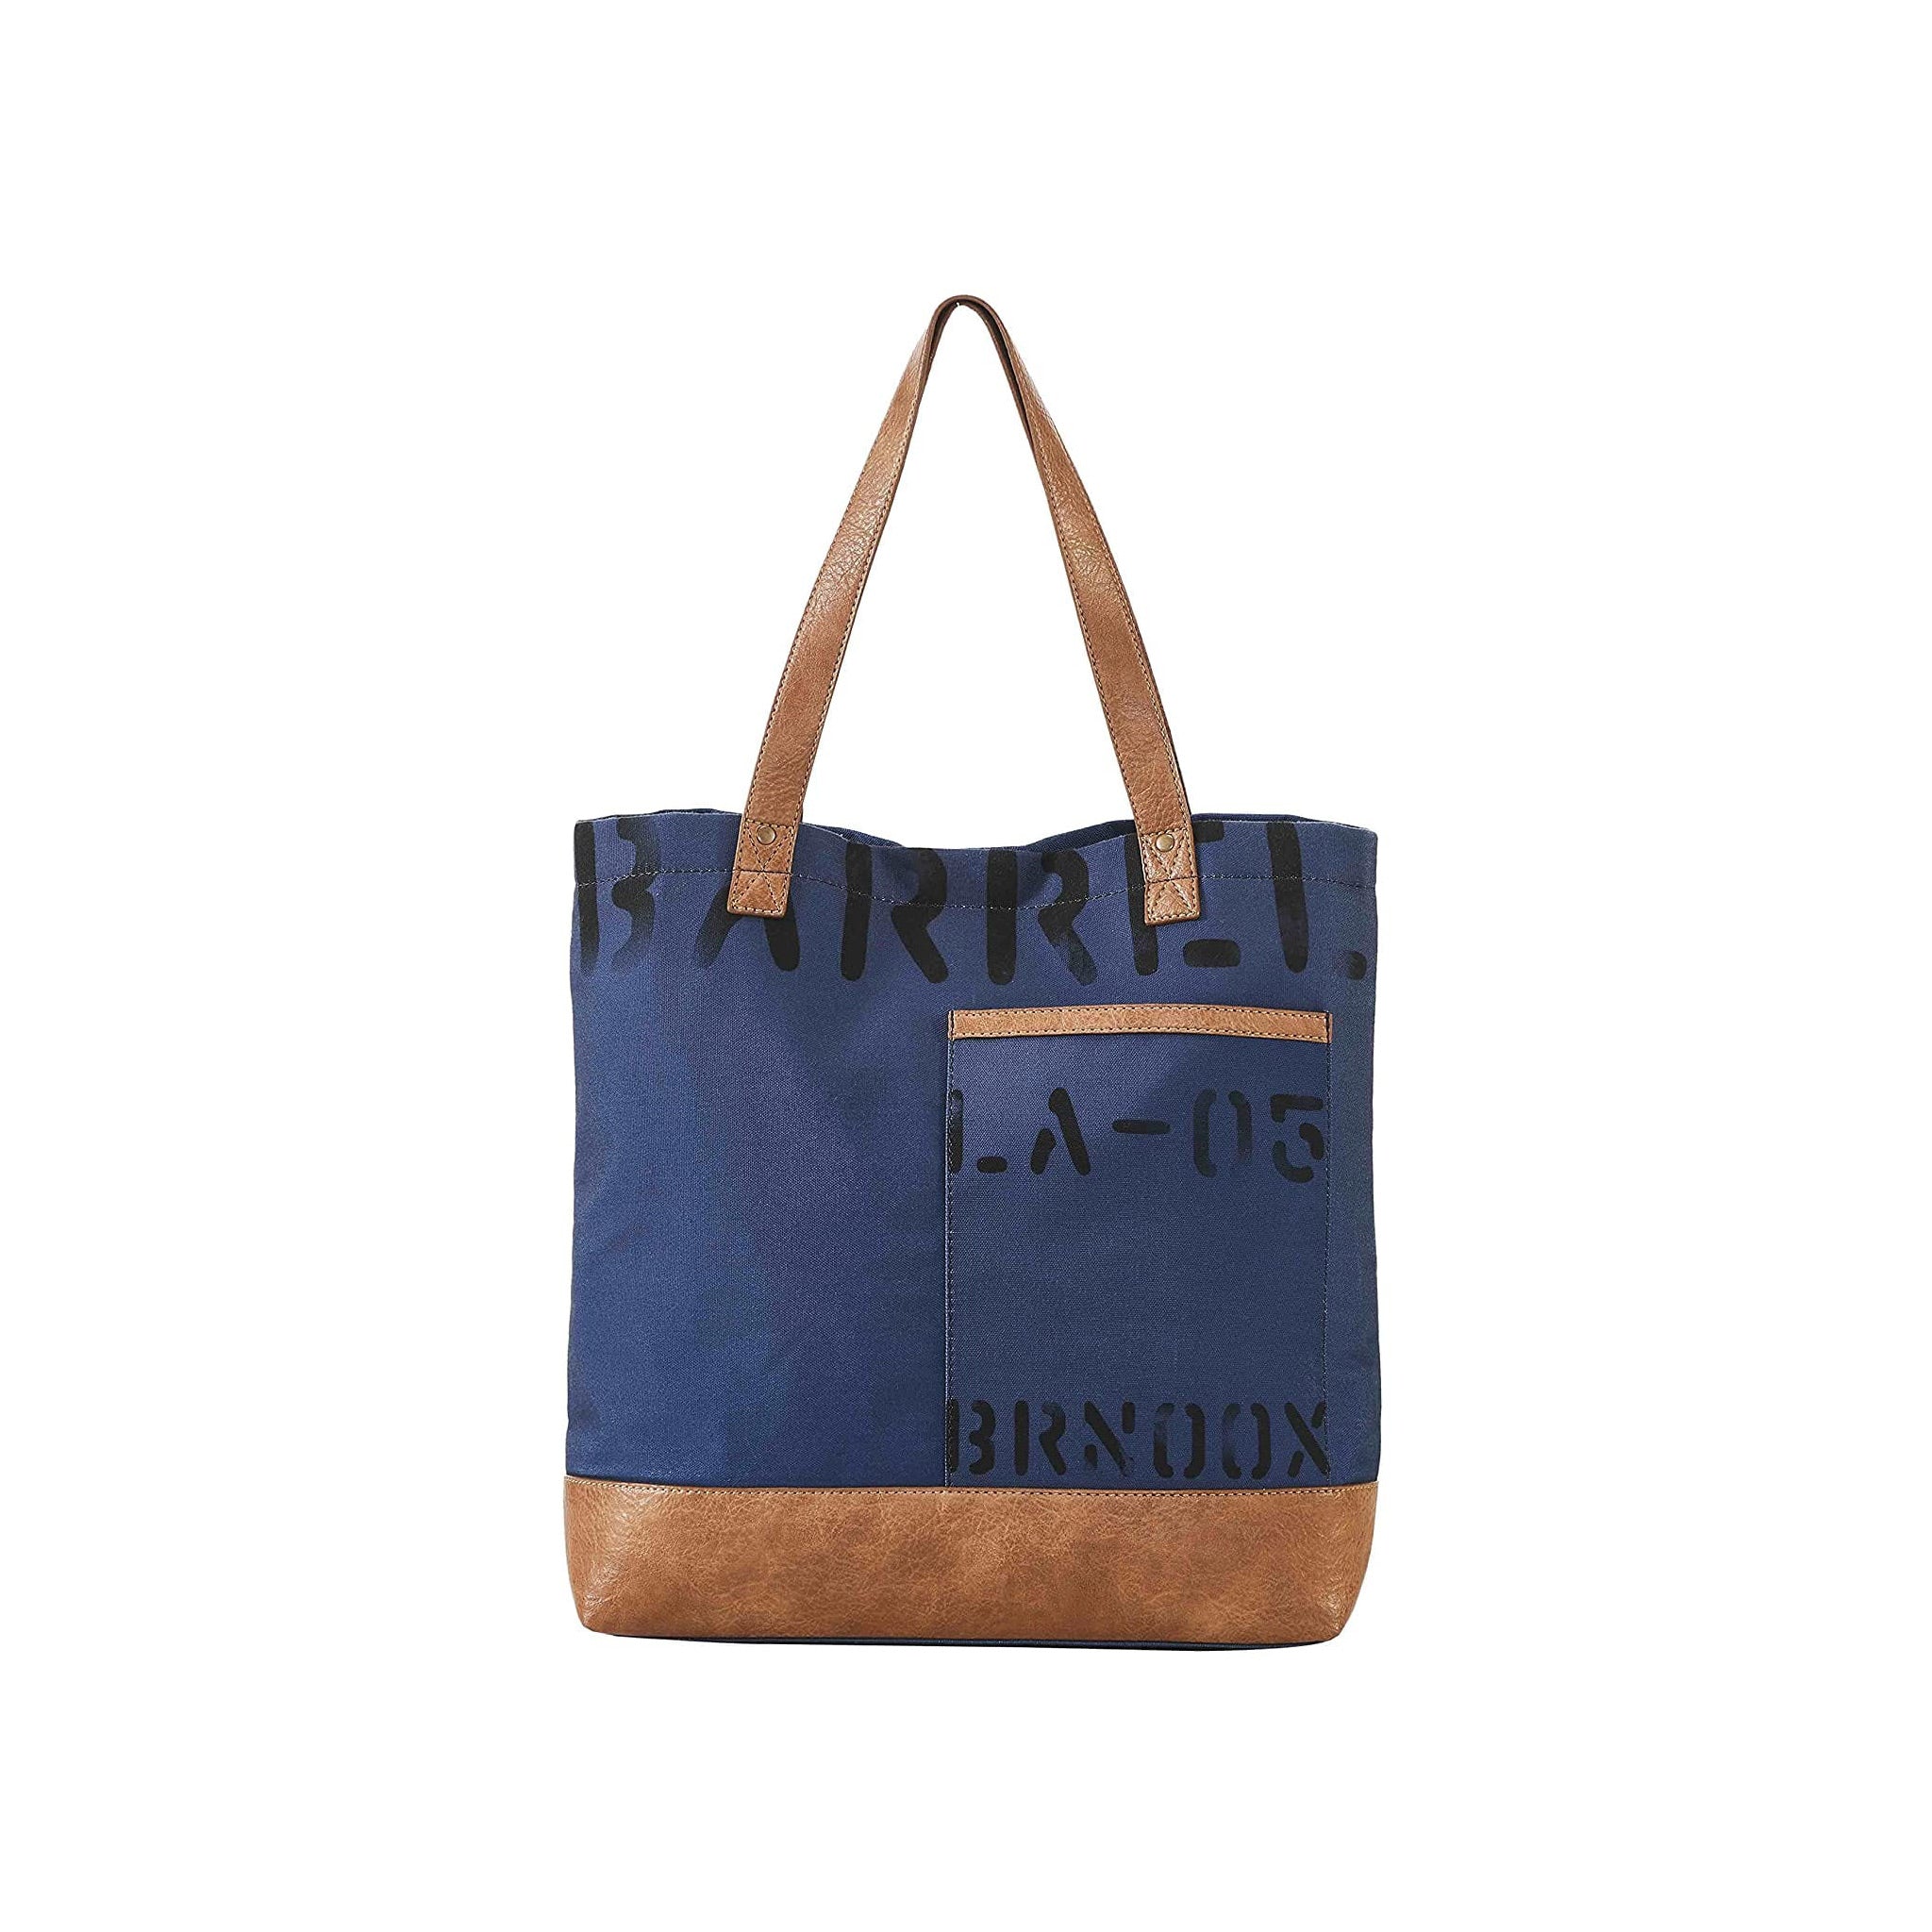 Mona B Royal Blue Large Canvas Handbag for Women | Tote Bag for Grocery, Shopping, Travel | Stylish Vintage Shoulder Bags for Women